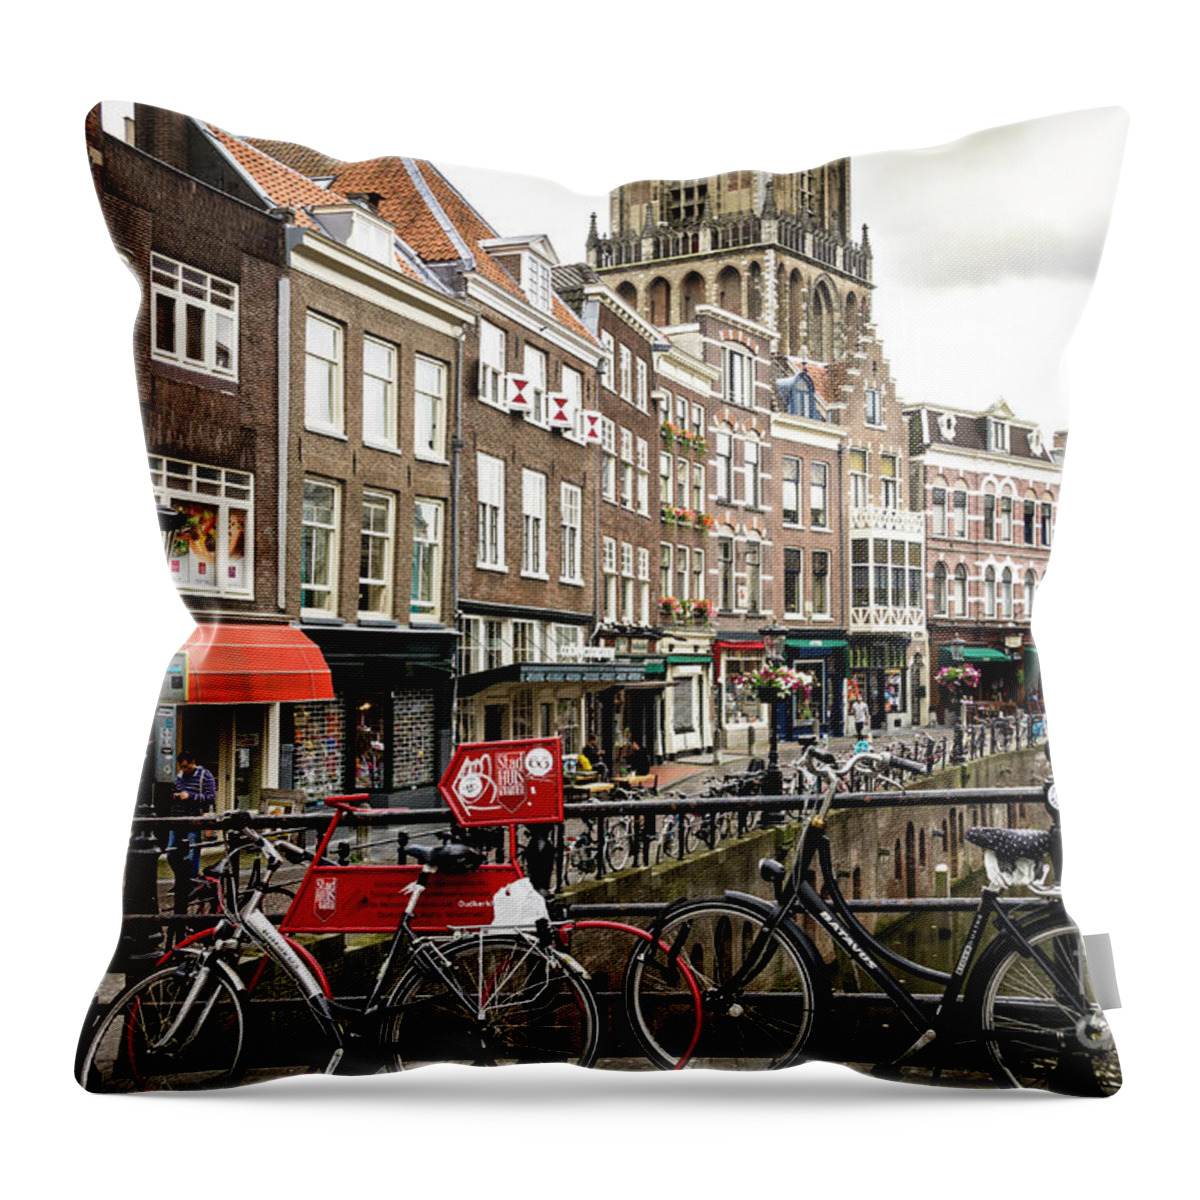 Amsterdam Throw Pillow featuring the photograph The Vismarkt in Utrecht by RicardMN Photography